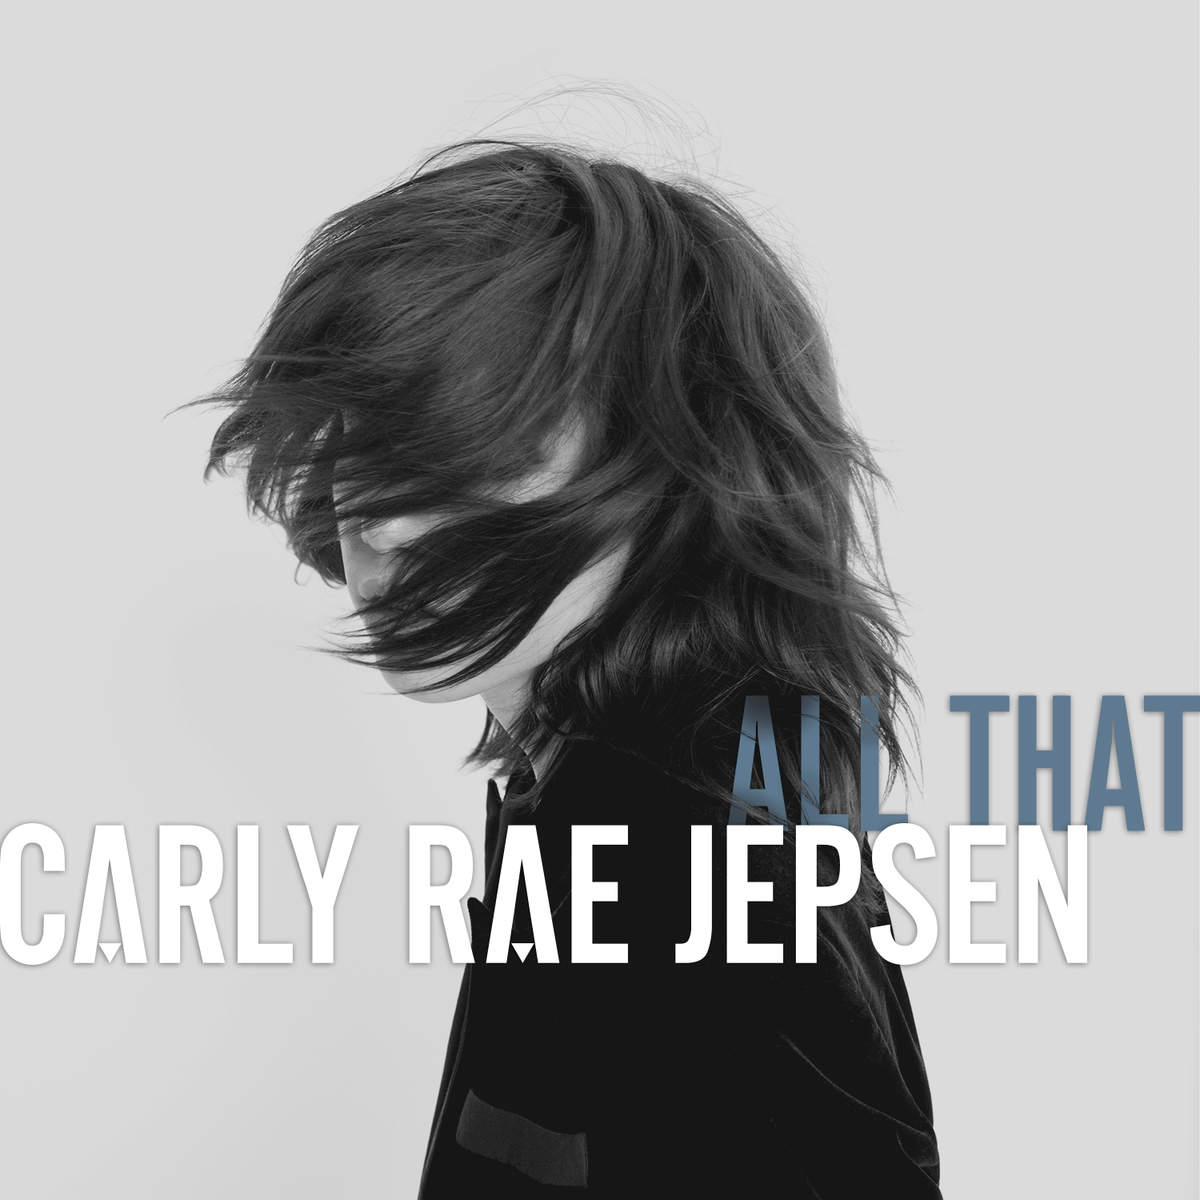 Carly Rae Jepsen – All That